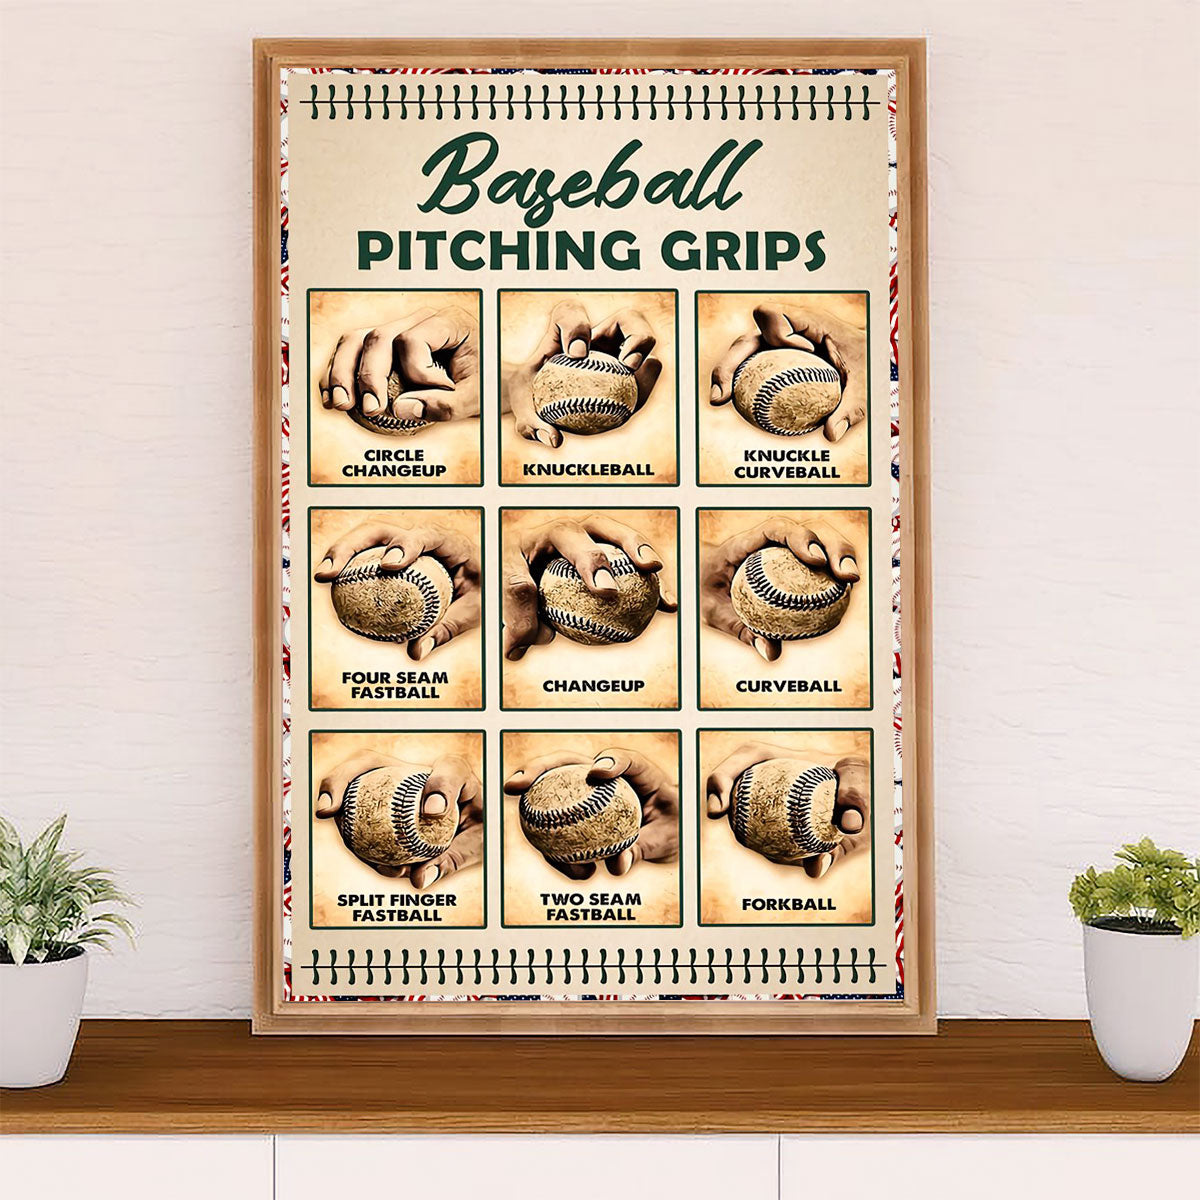 Baseball Pitching Grips Poster, Vintage Poster